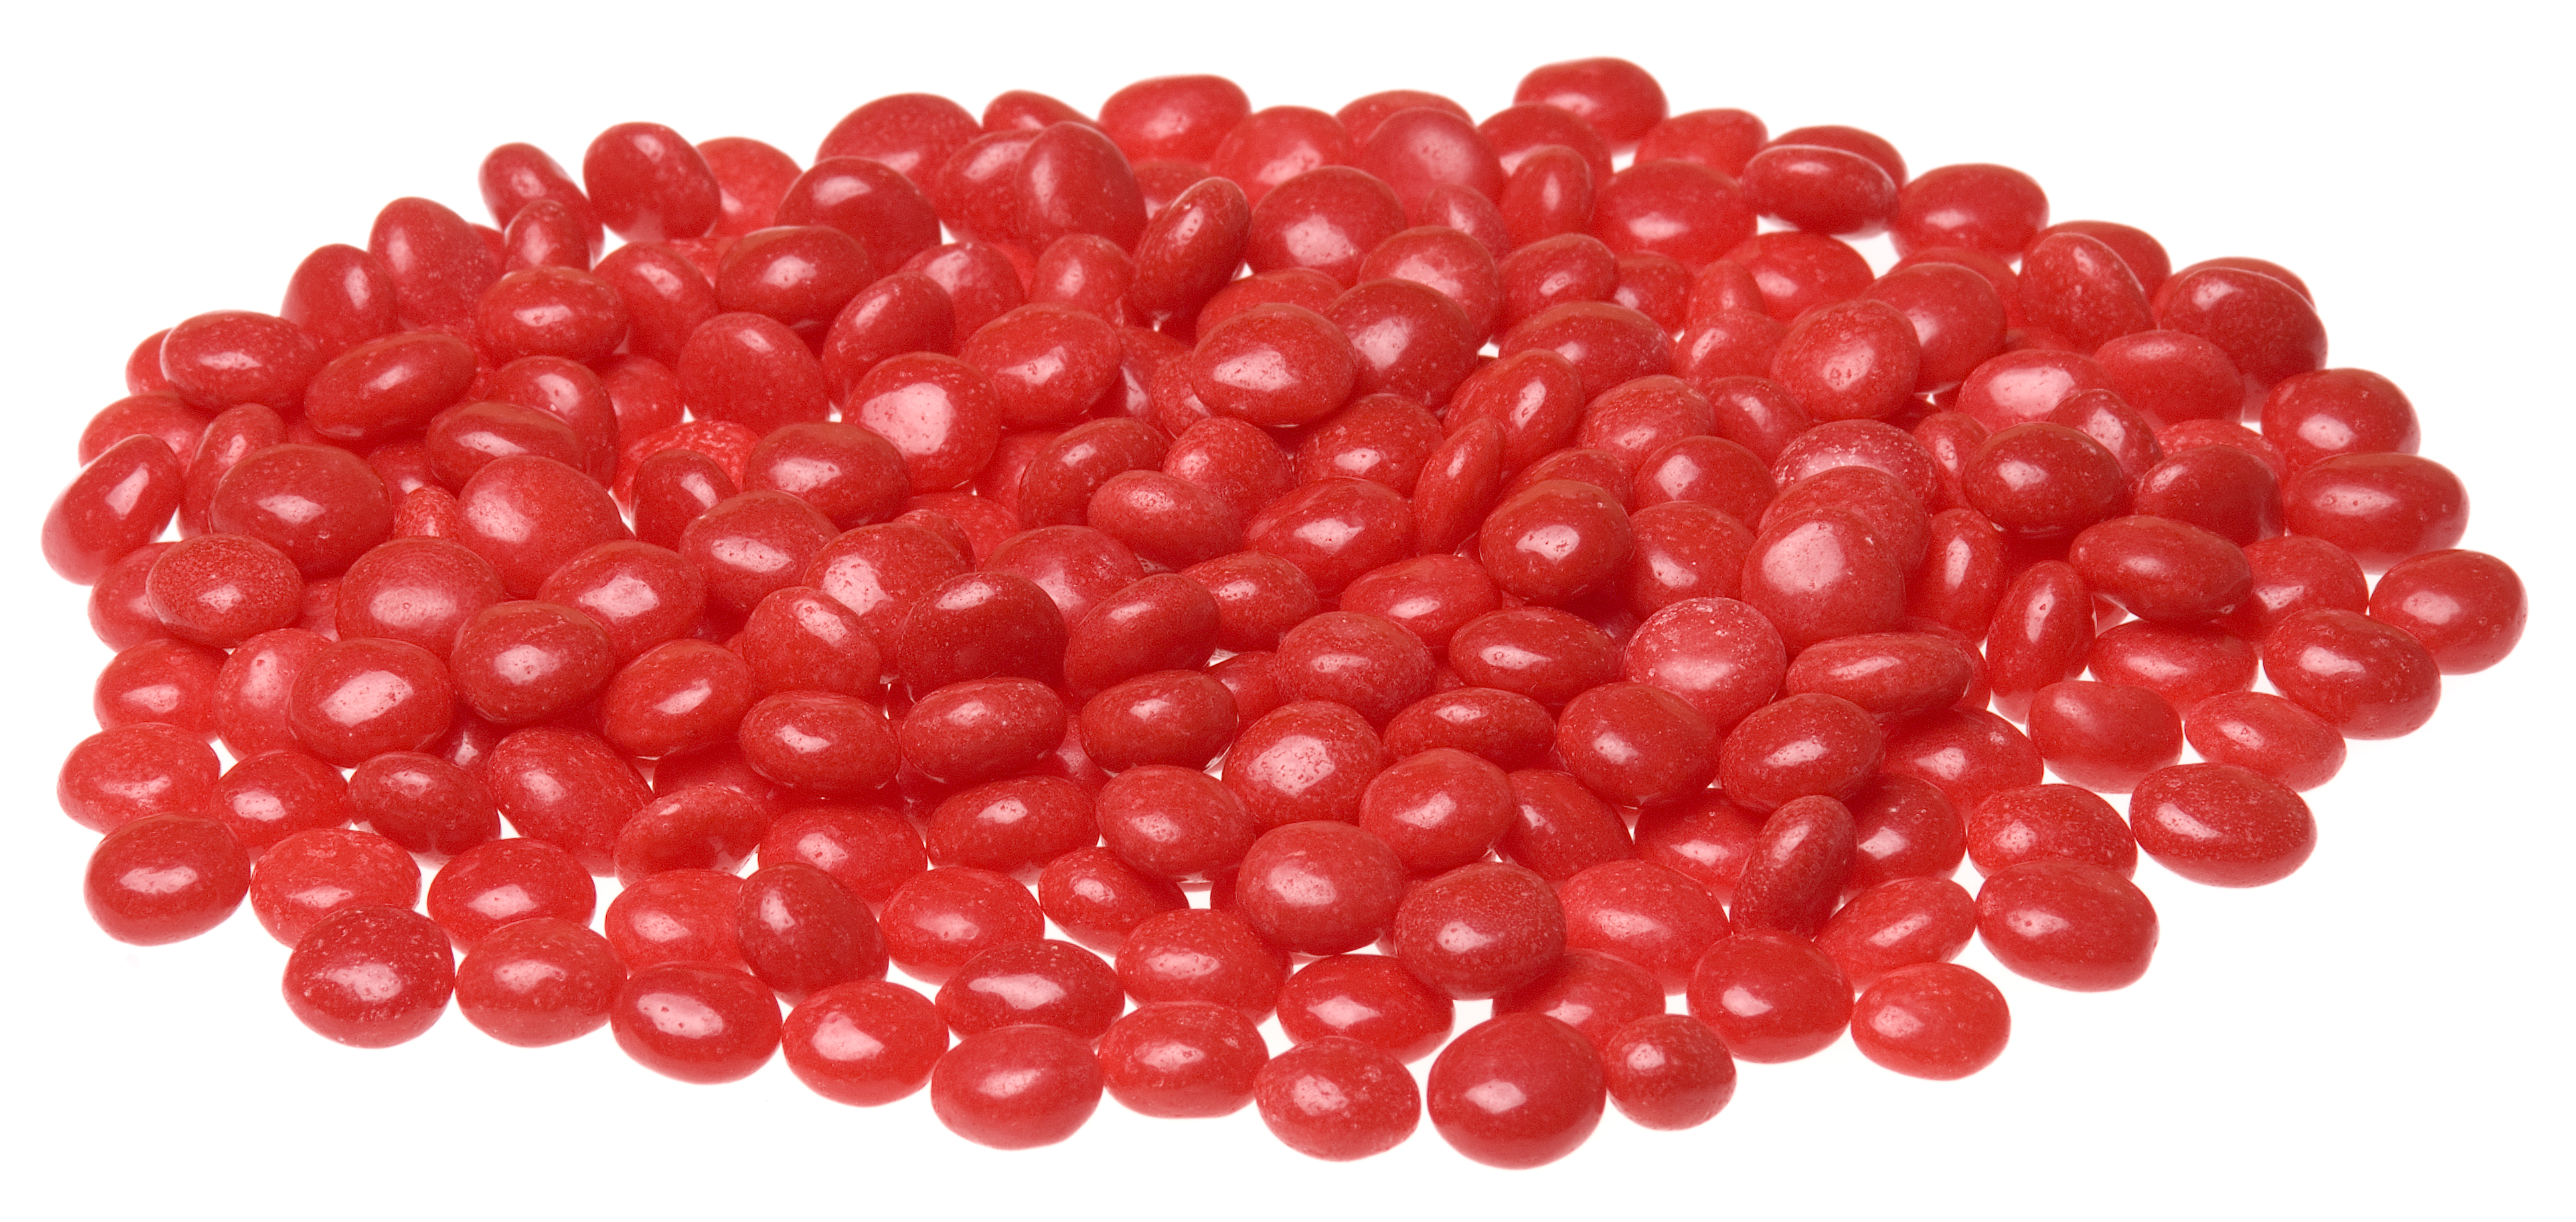 File:Ferrara-Pan-Red-Hots-Candy.jpg - Wikipedia